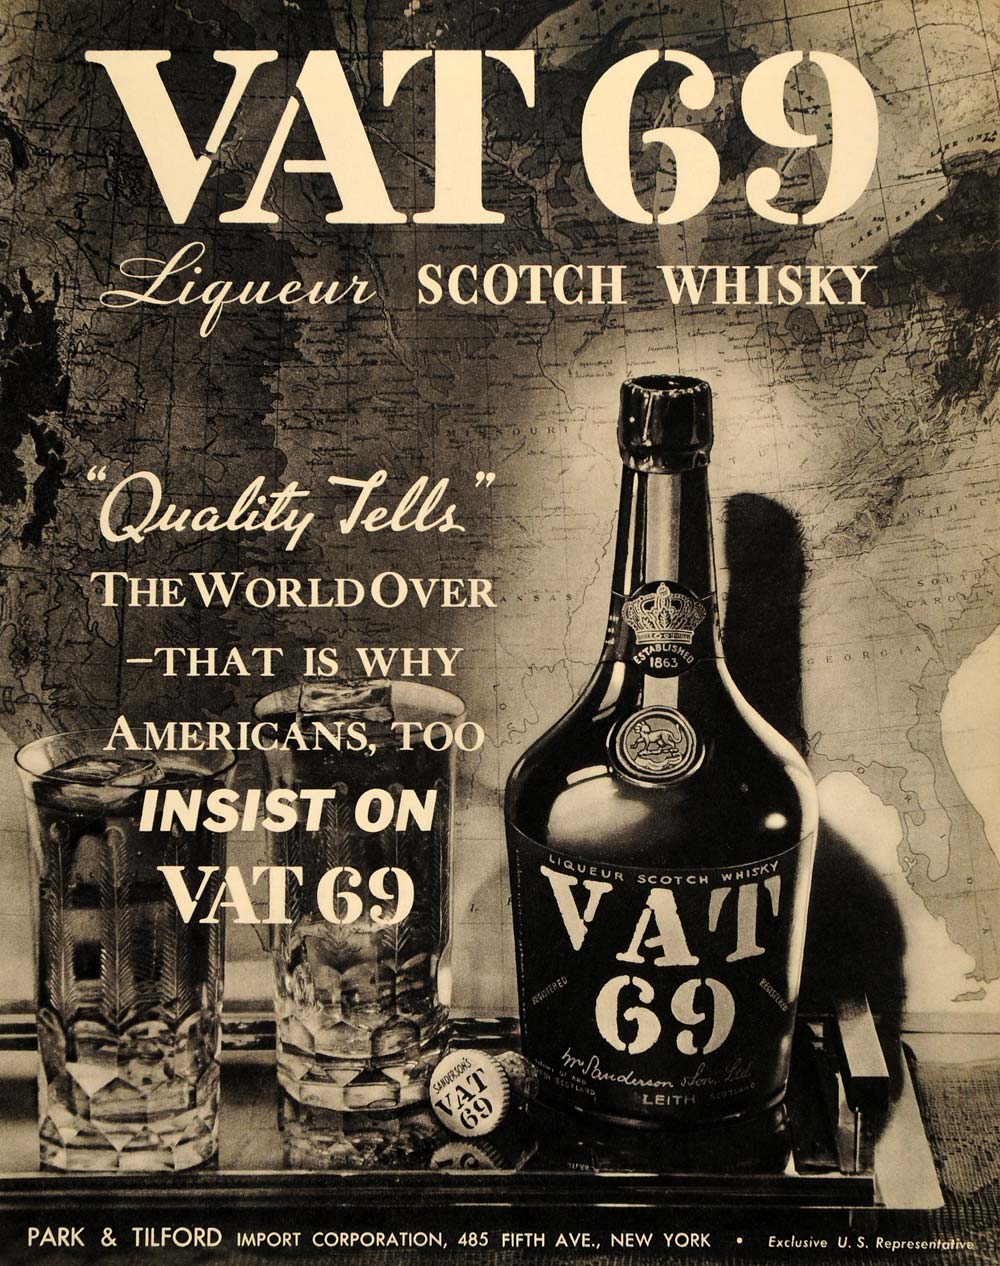 1935 Ad Park Tilford Sanderson's Vat 69 Scotch Whisky - ORIGINAL ADVERTISING F3A